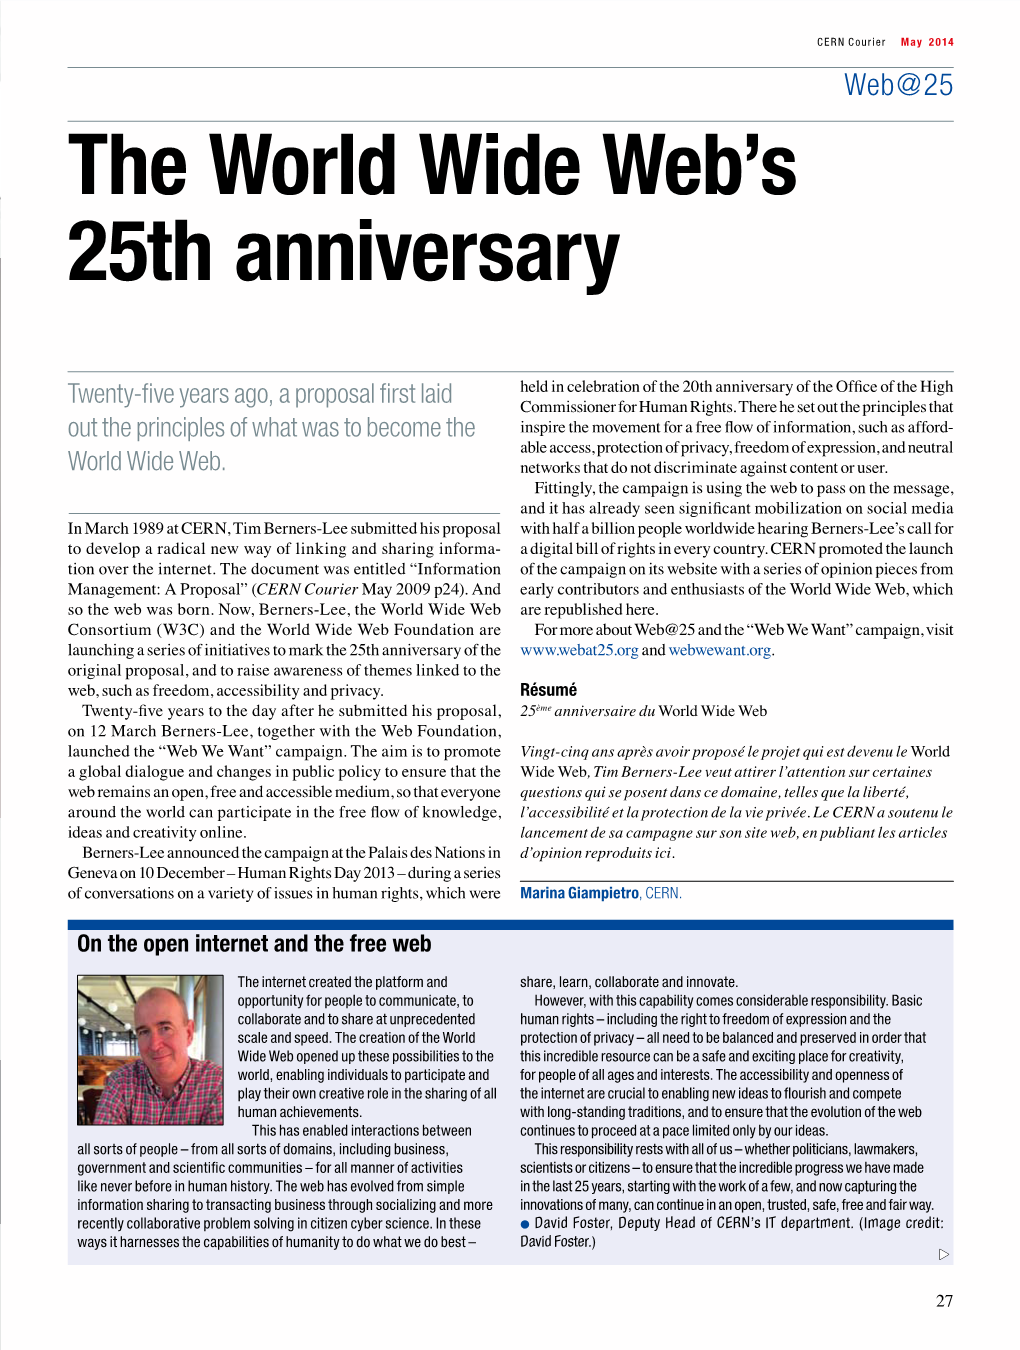 The World Wide Web's 25Th Anniversary